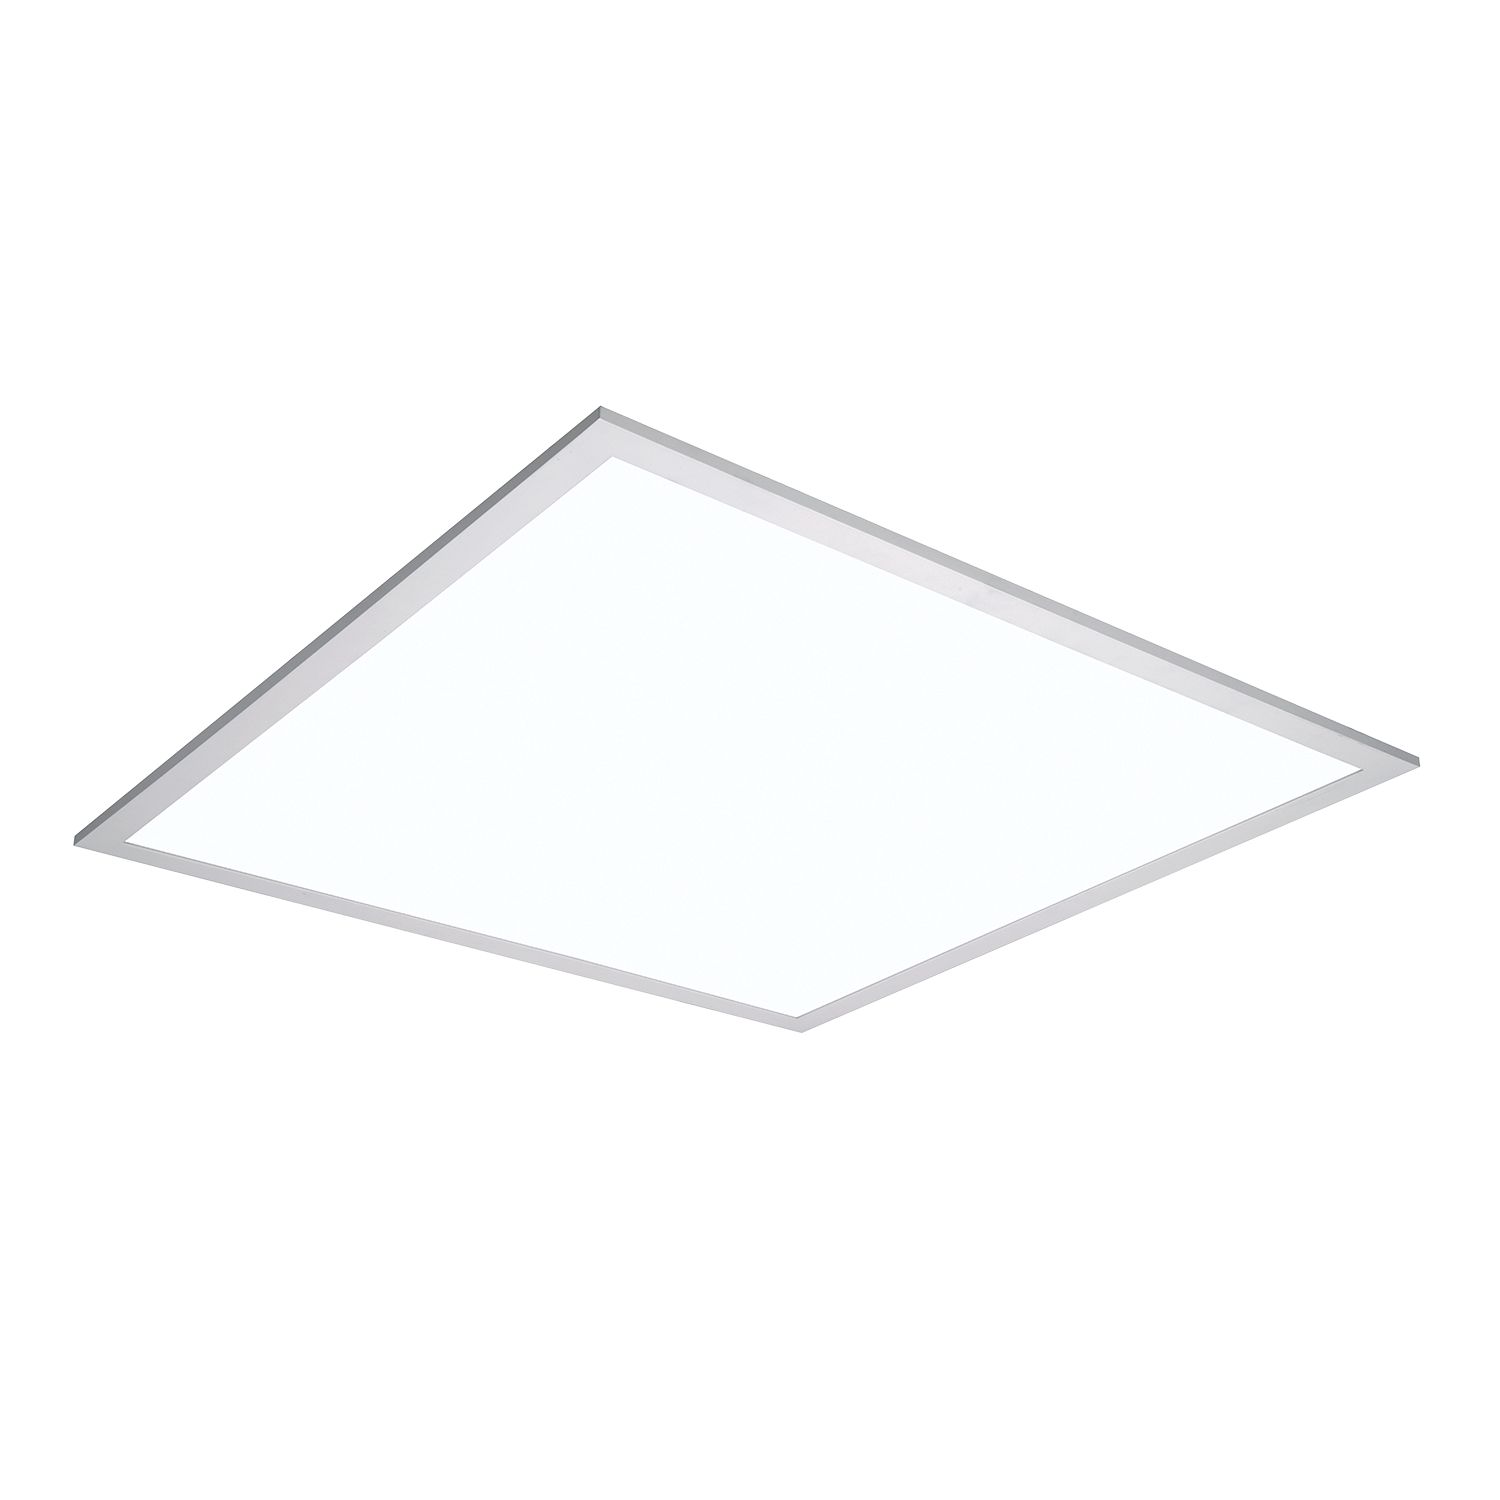 Flat Panel LED Lighting - FPanel LED Panel Series | Cooper Lighting | Cooper Lighting Solutions